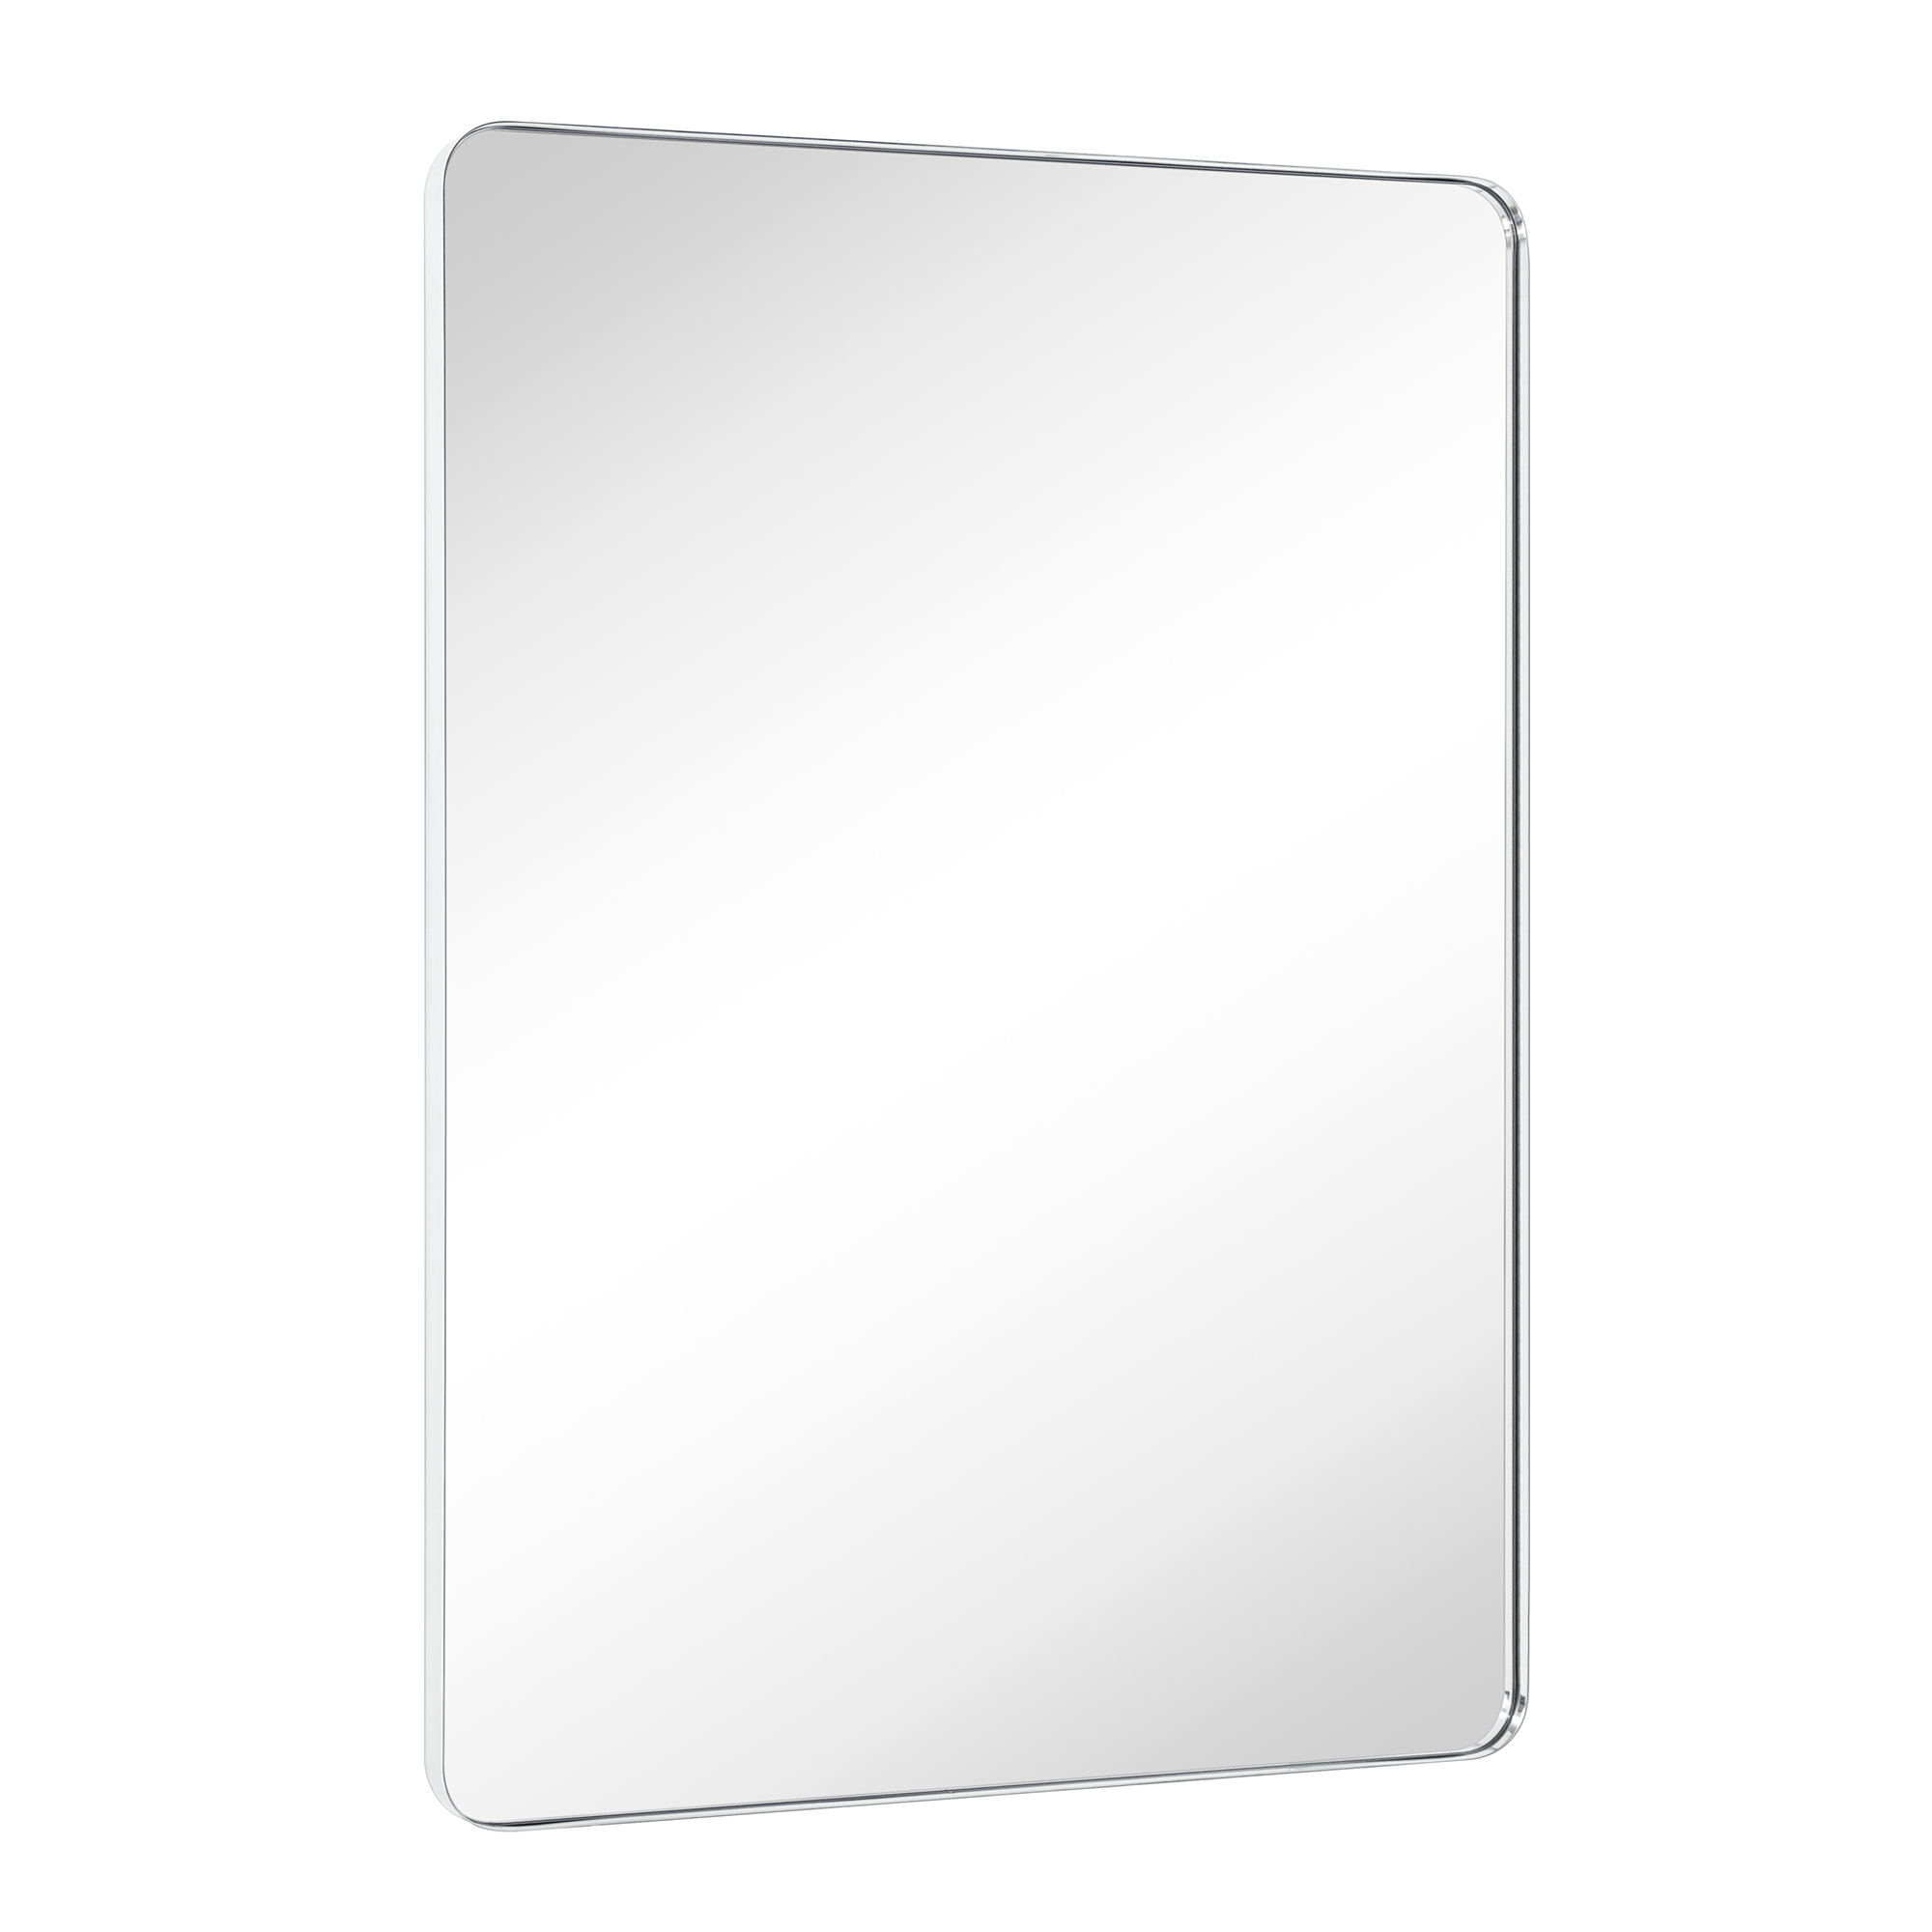 Kengston Modern & Contemporary Rectangular Bathroom Vanity Mirrors-36x48-Chrome